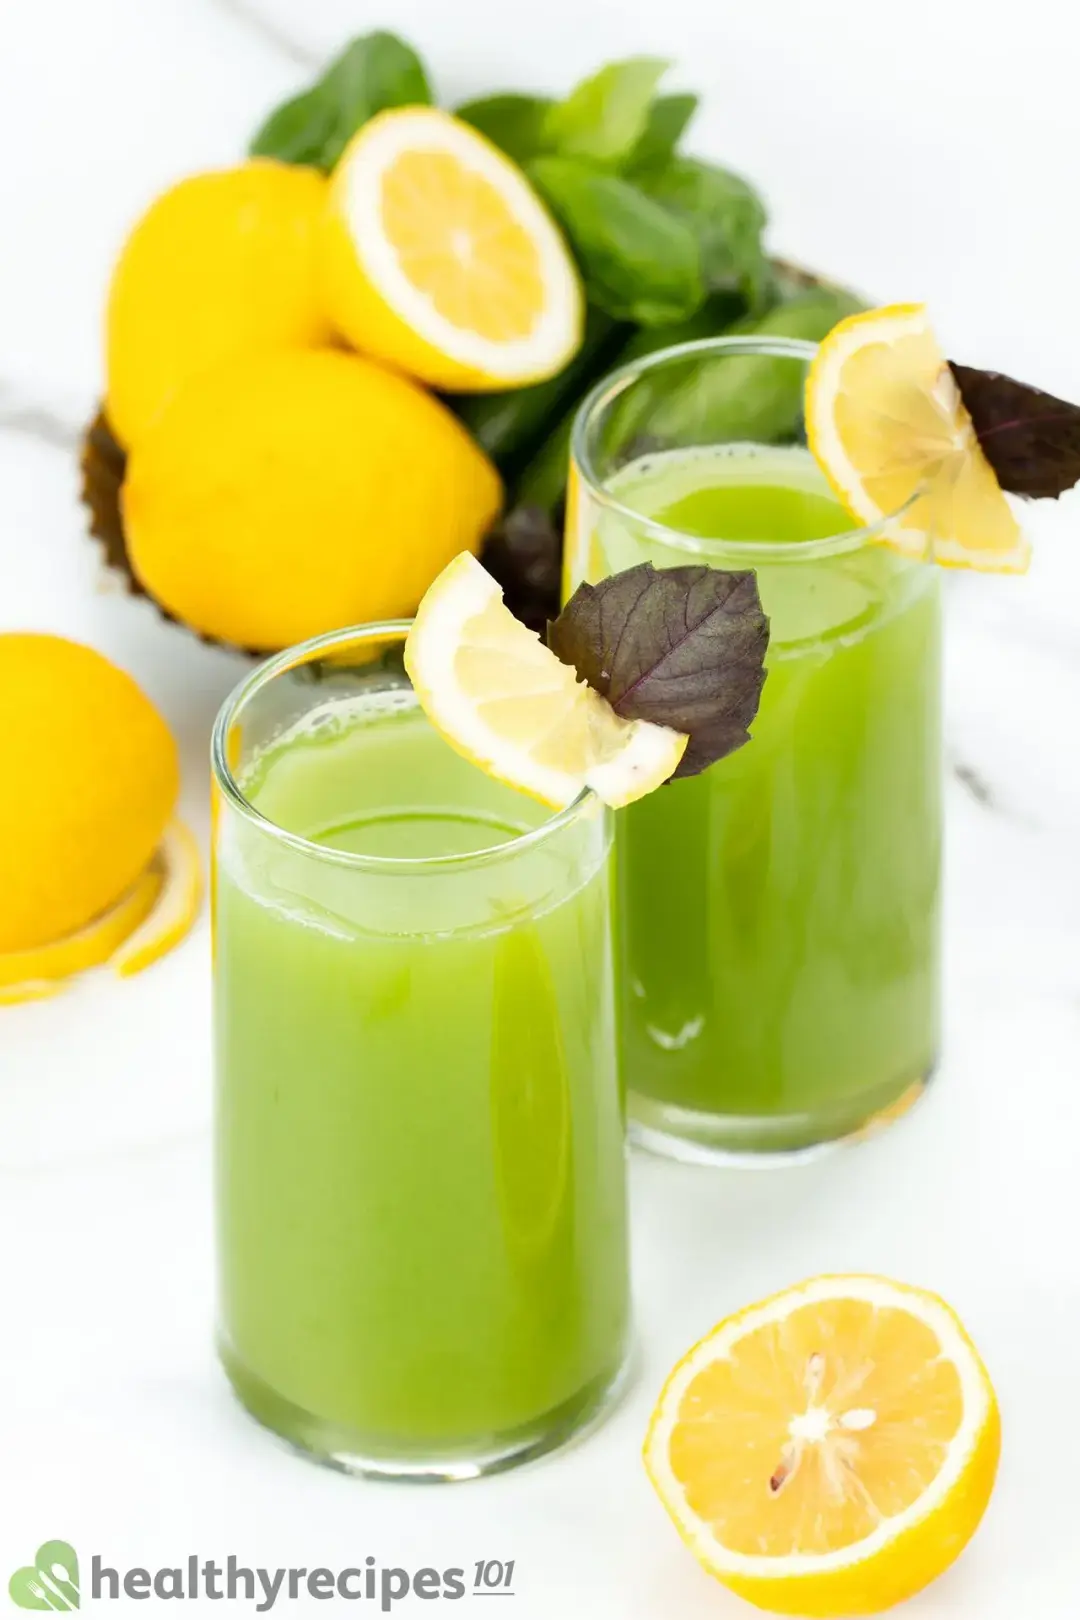 How Healthy is Cucumber Lemon Juice